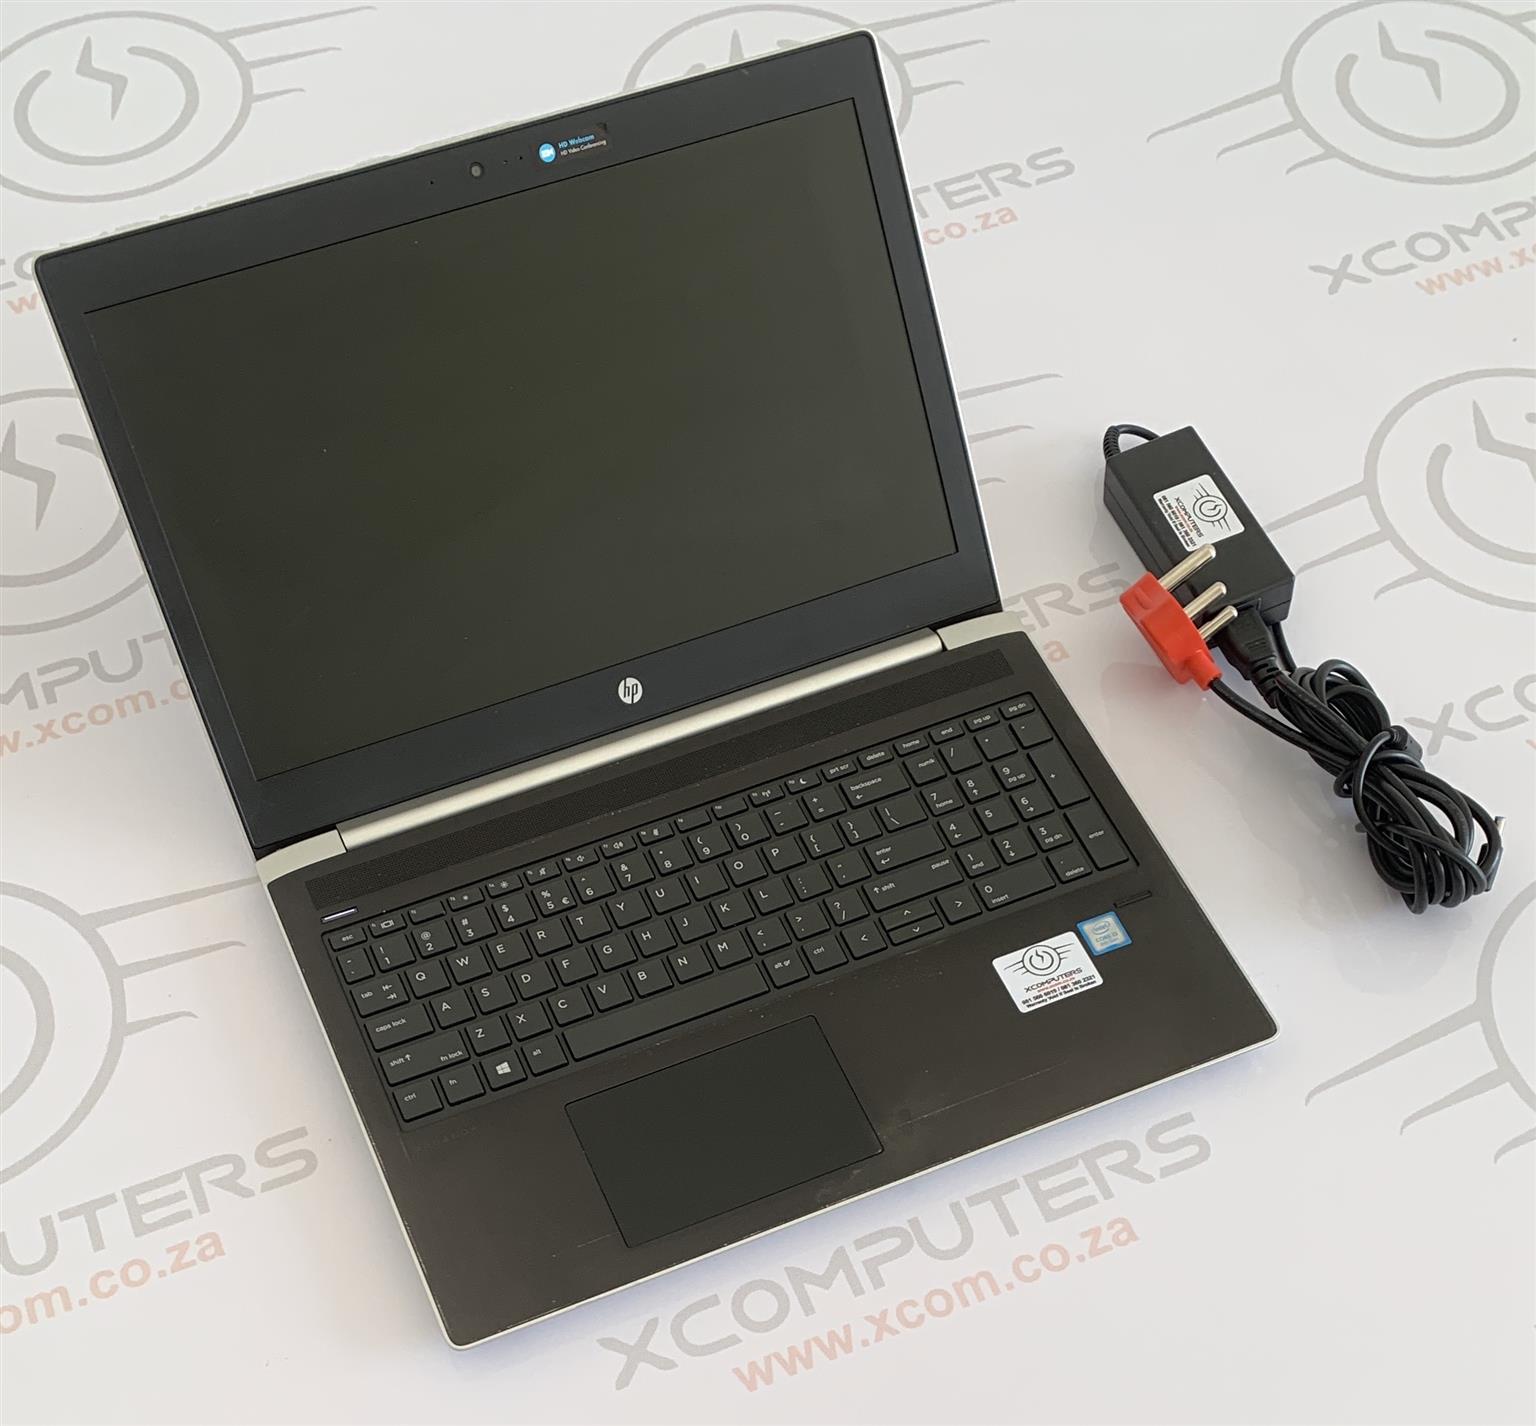 HP ProBook 450 8th Gen Laptop R5700